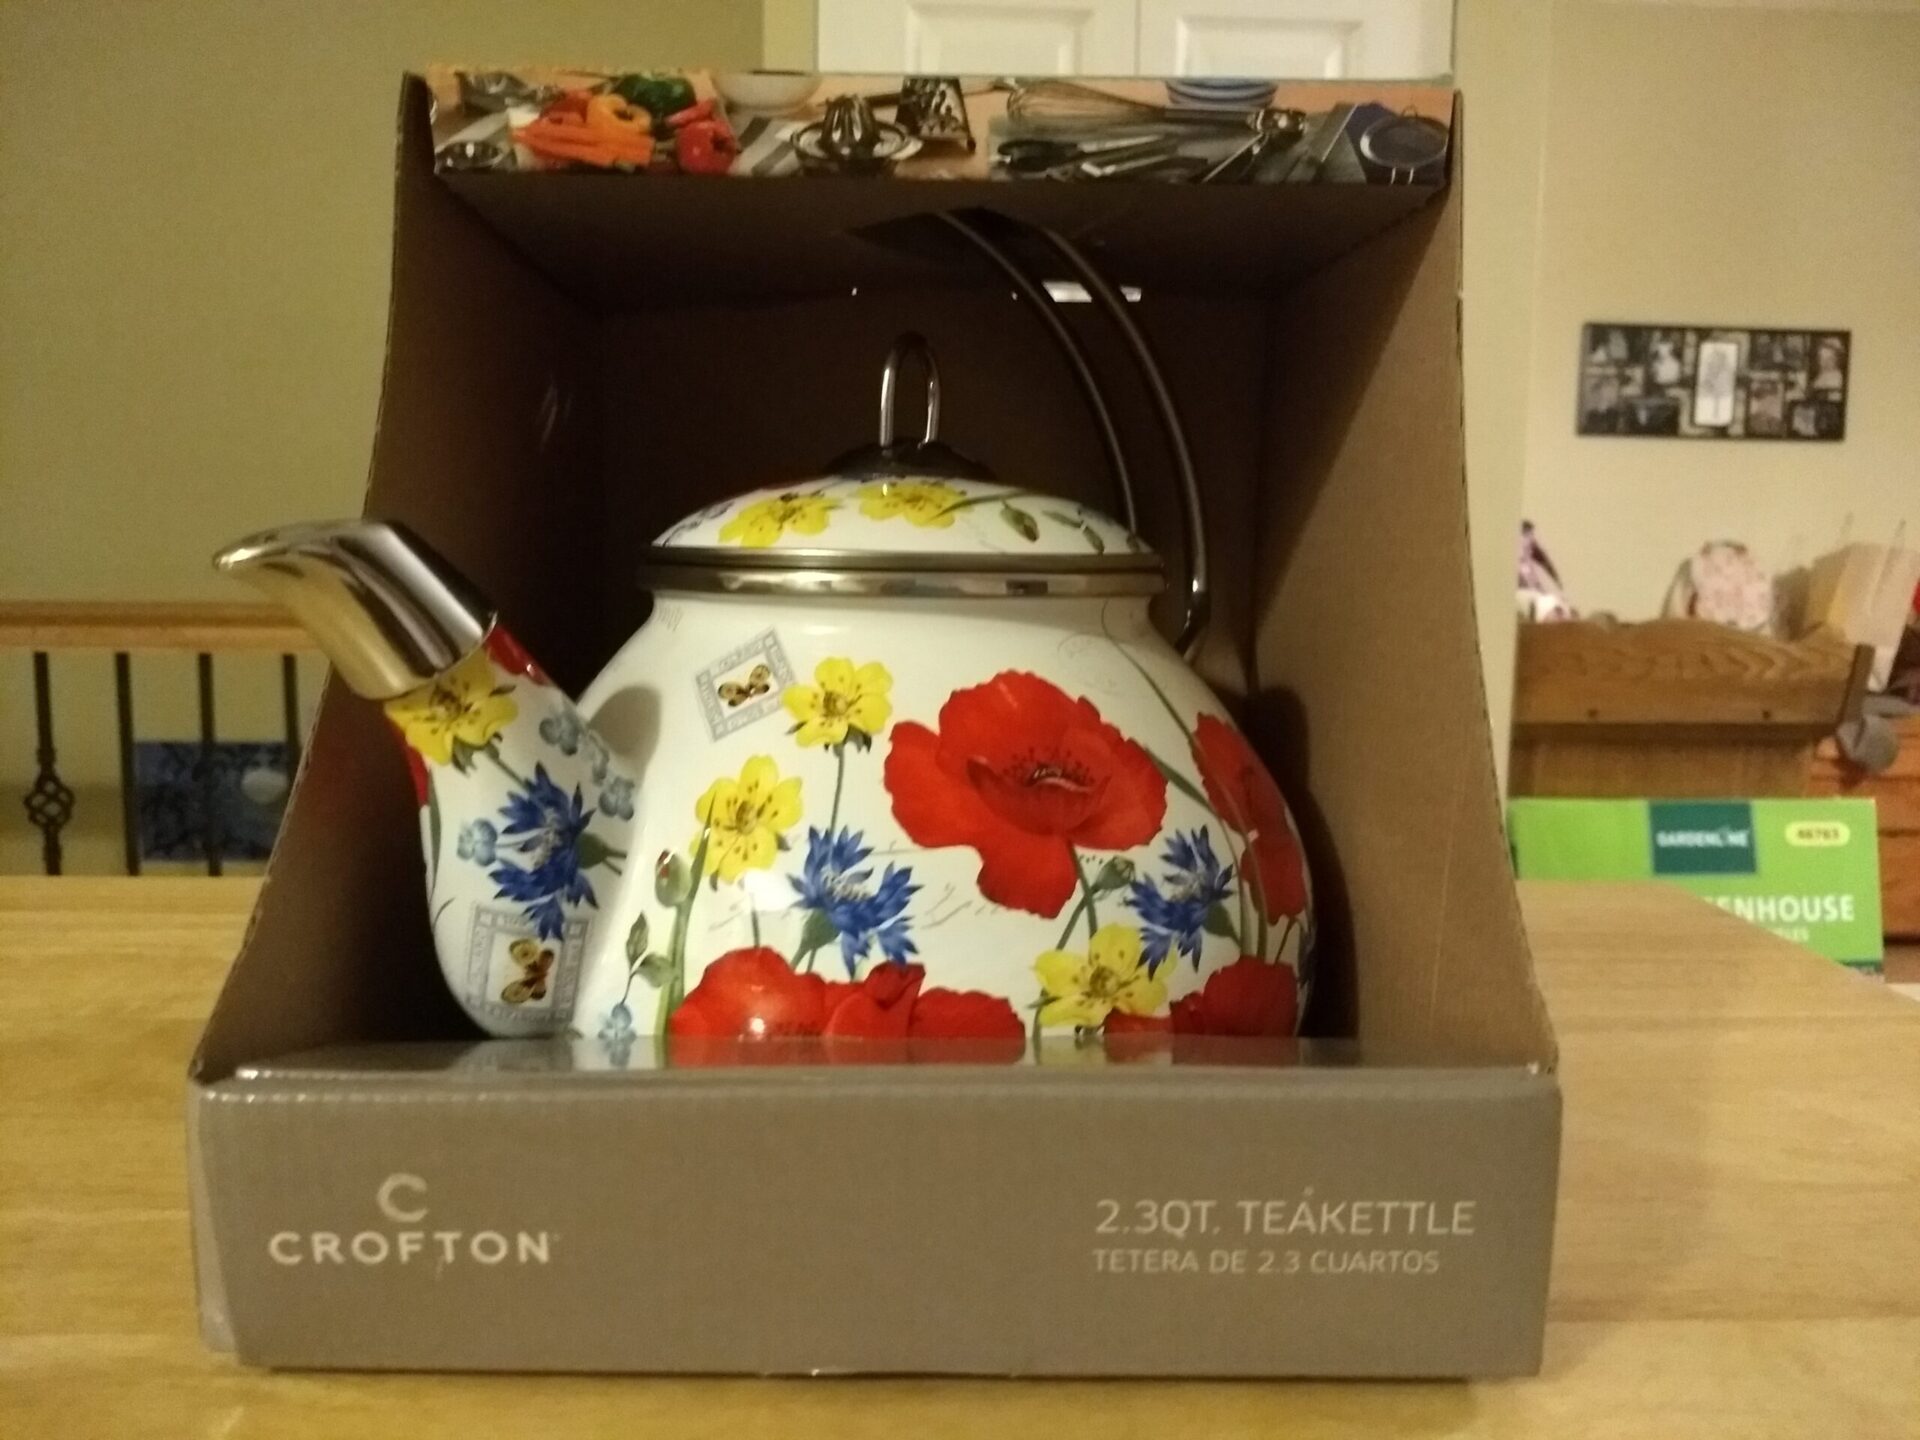 Crofton 2.3-Quart Teakettle